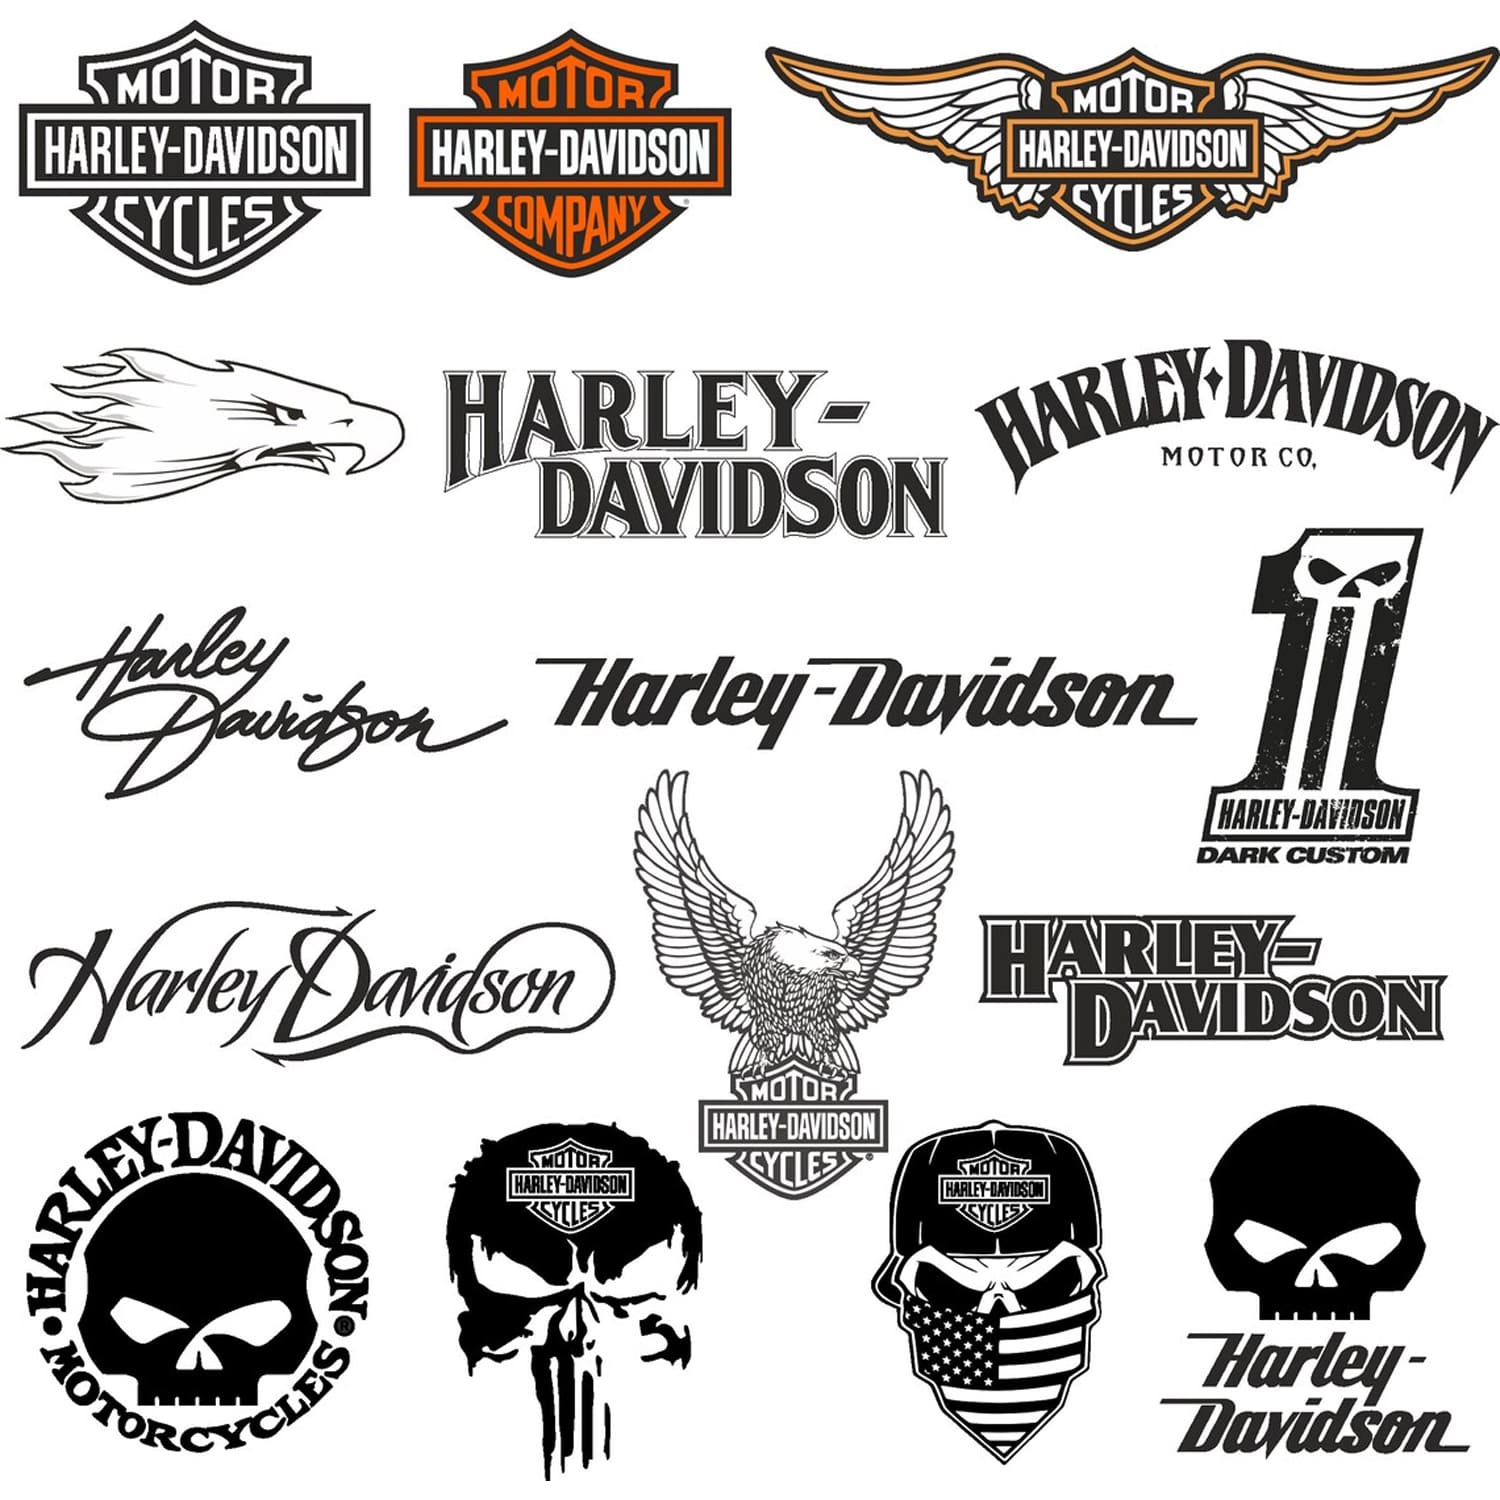 Harley davidson logos svg - main image preview.